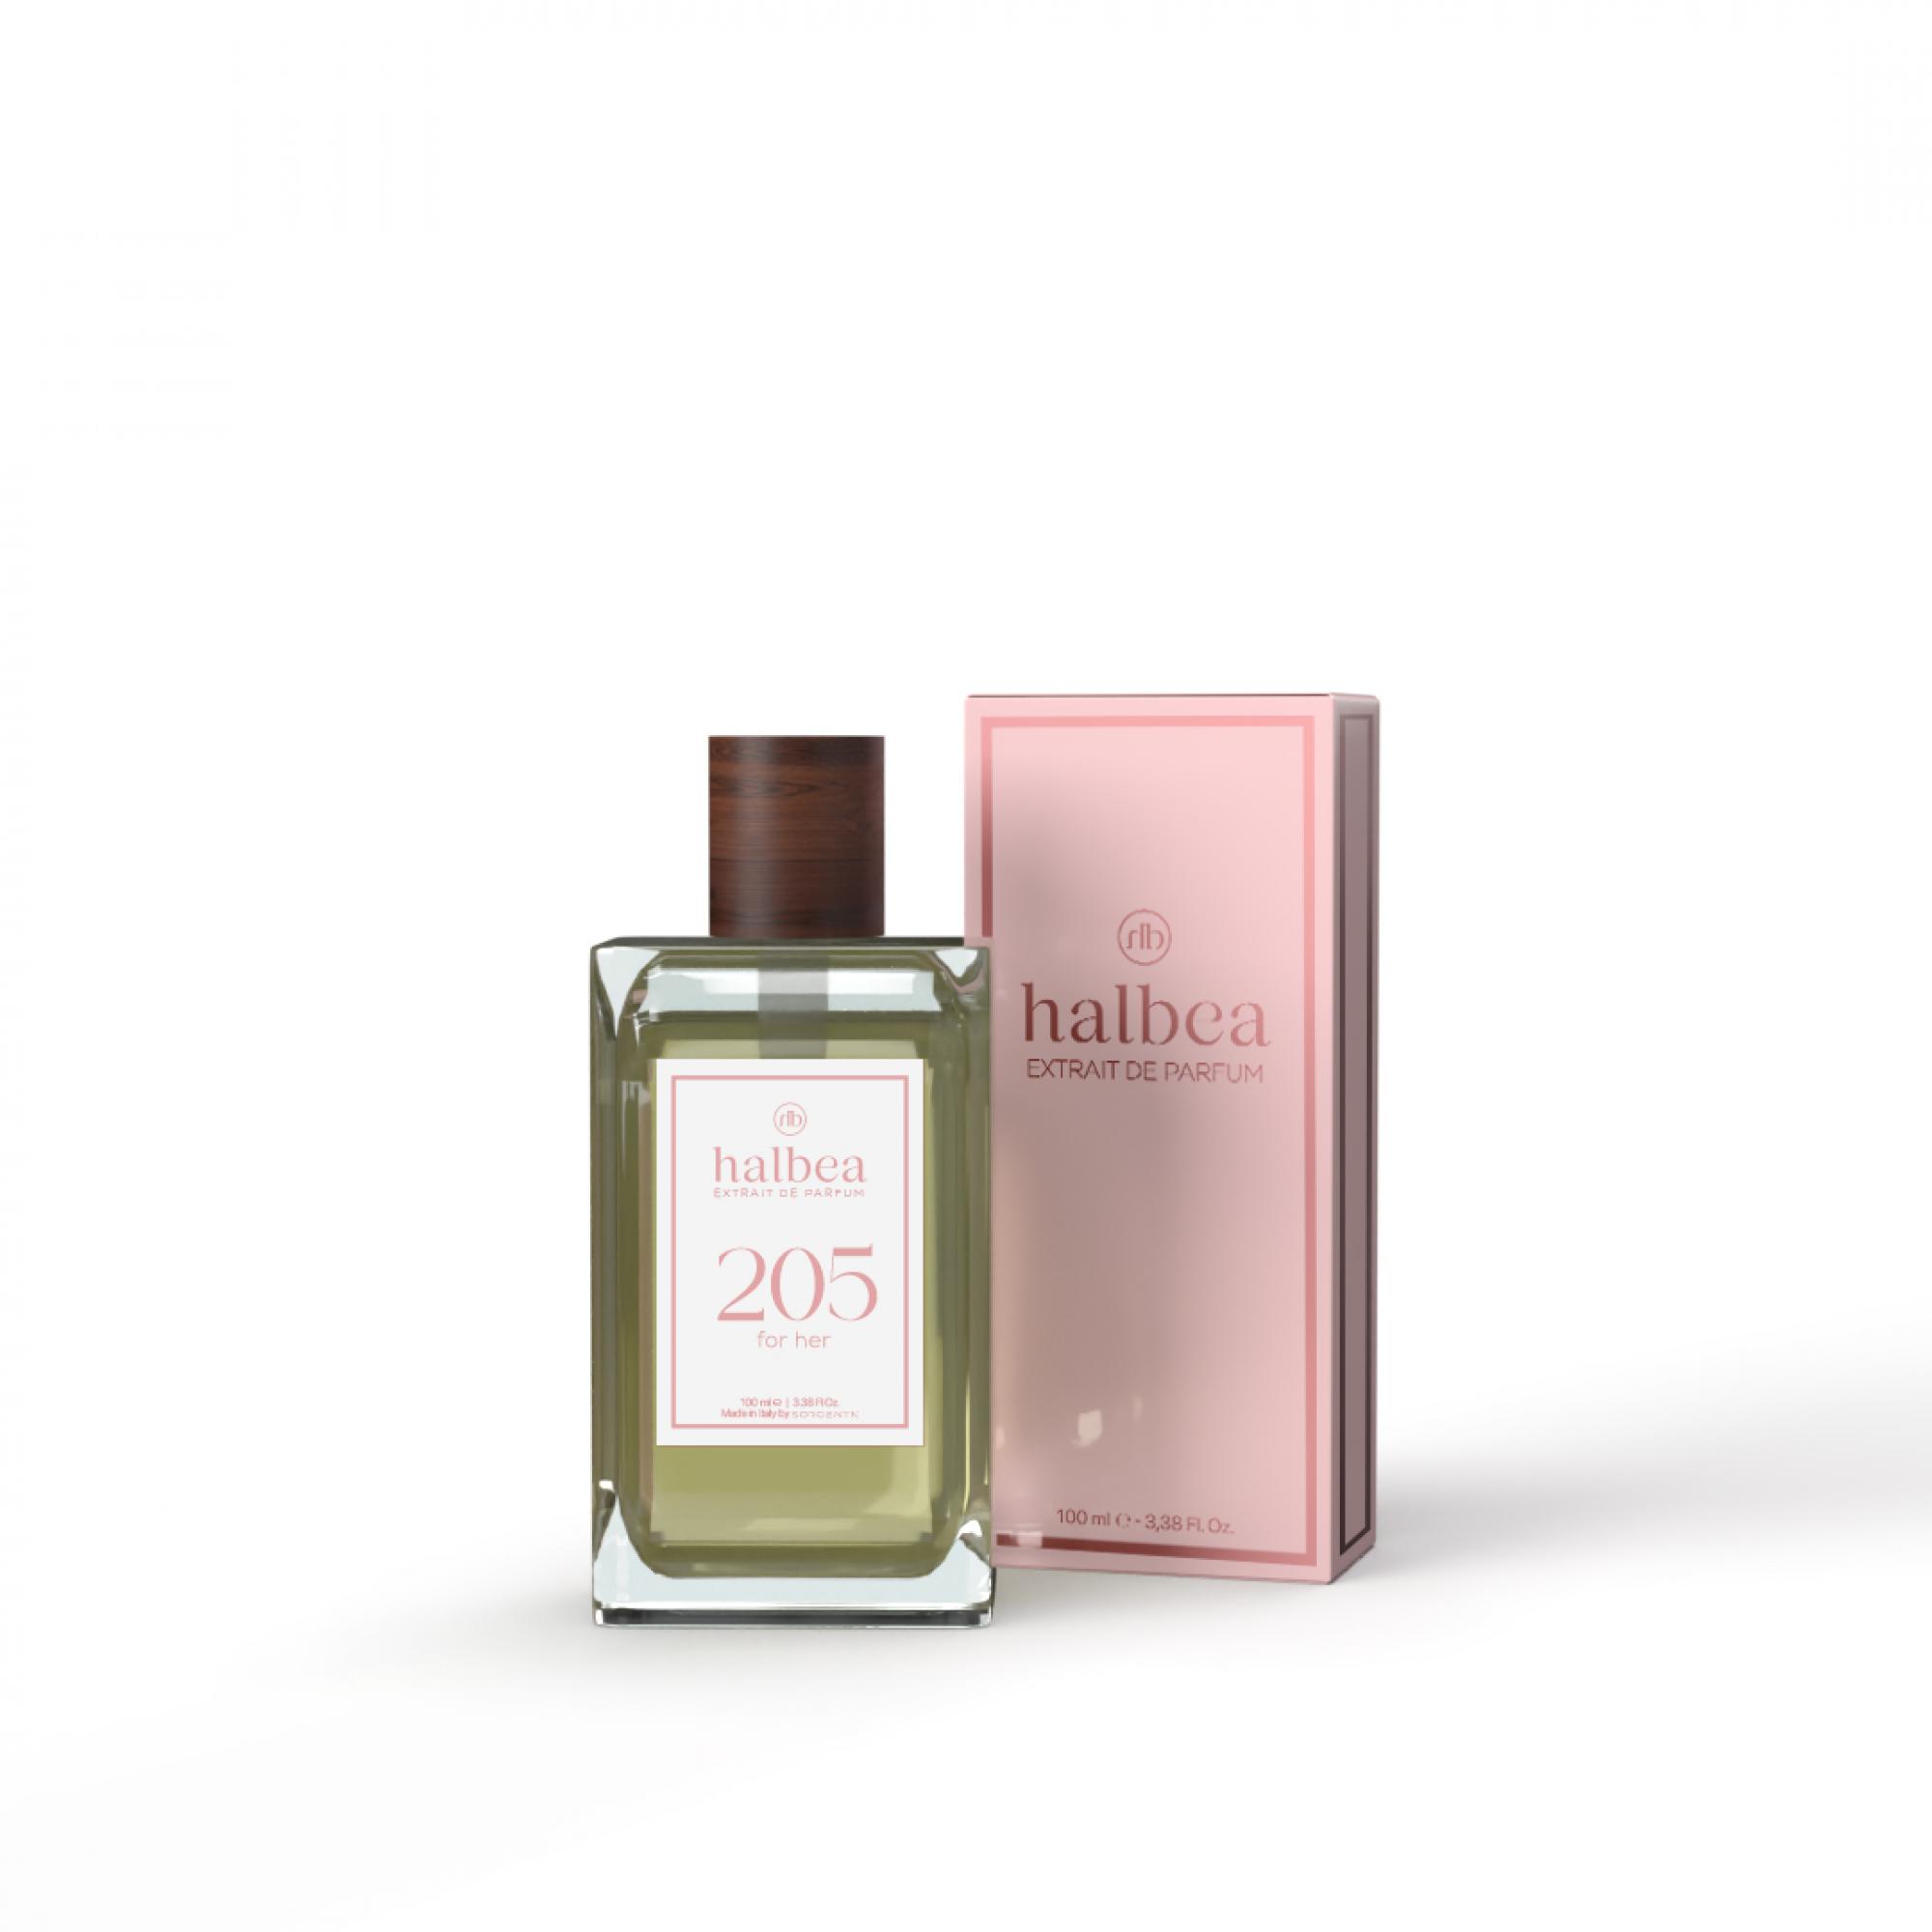 Halbea Parfum Nr. 205 insp. by Guerlain La Petite Robe Noire Sorgenta 100ml